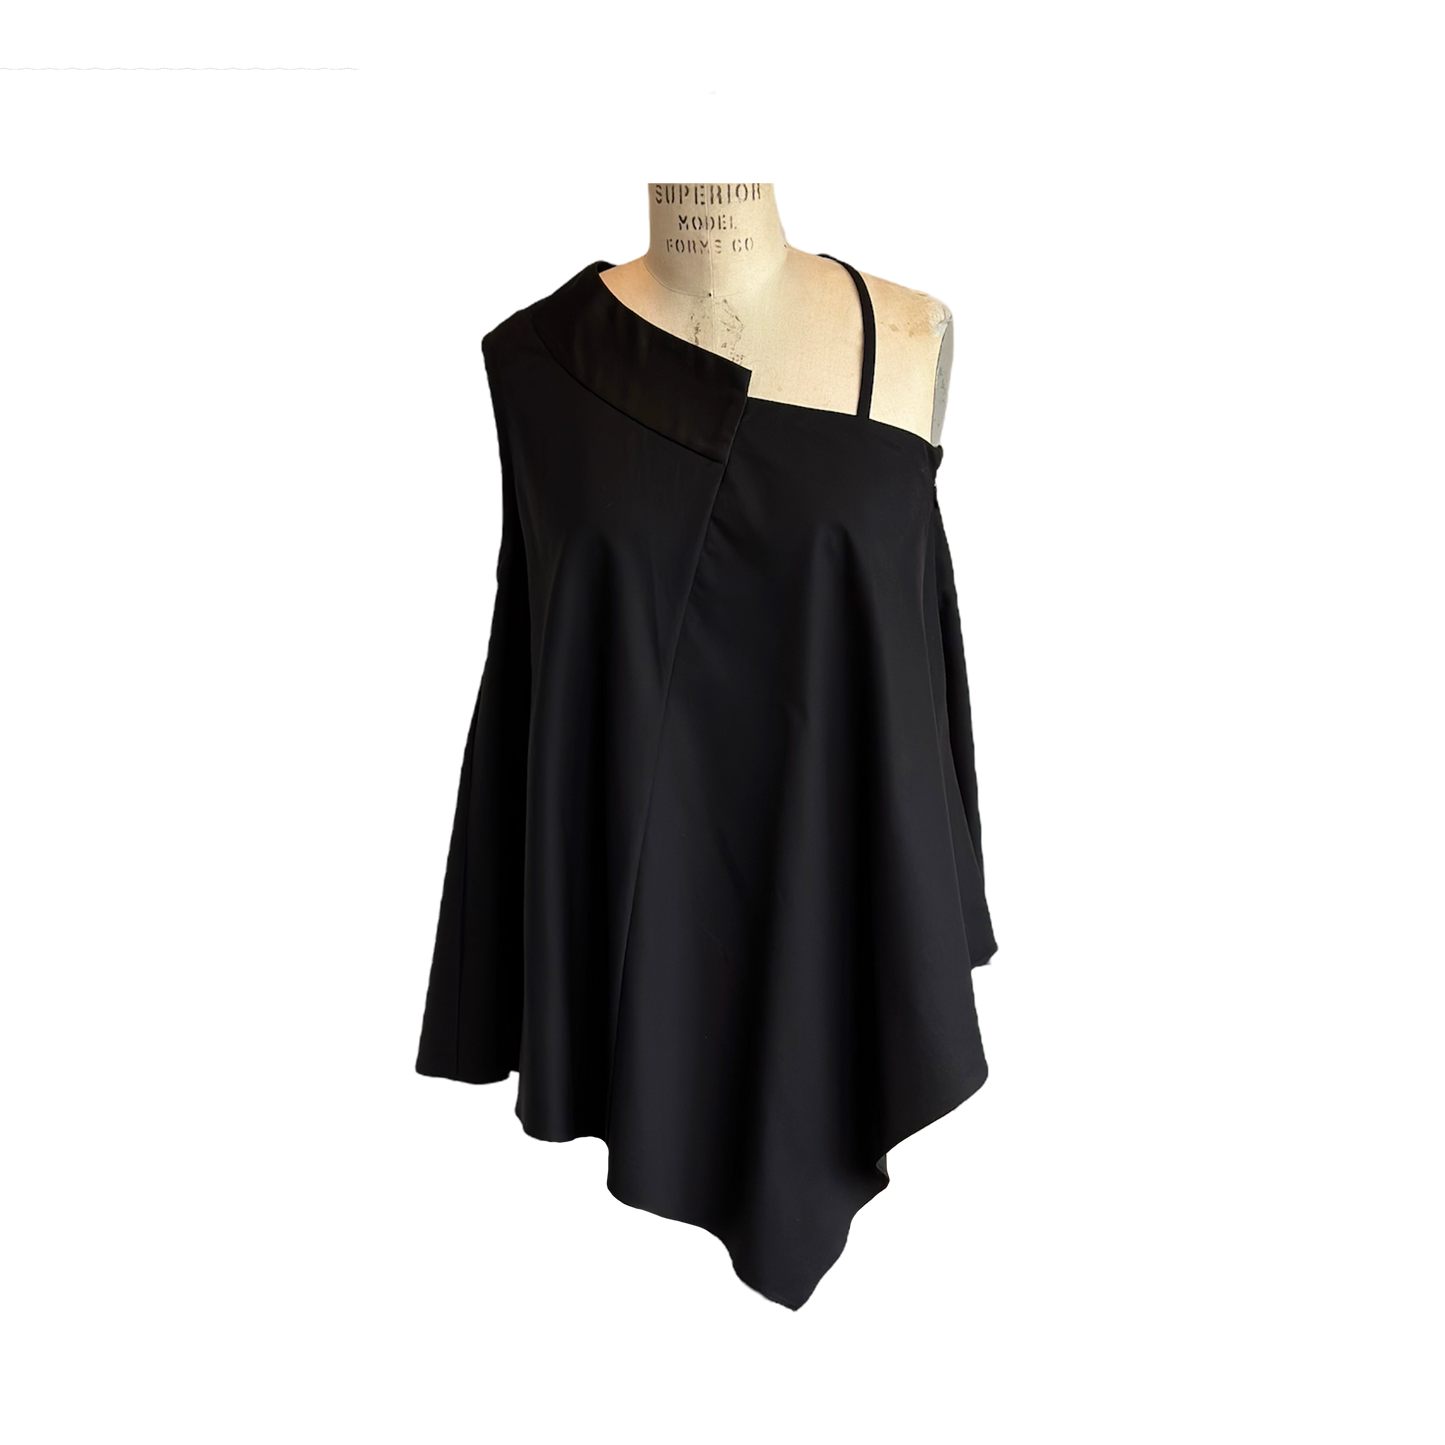 Solid black one shoulder top with asymmetric shoulder strap